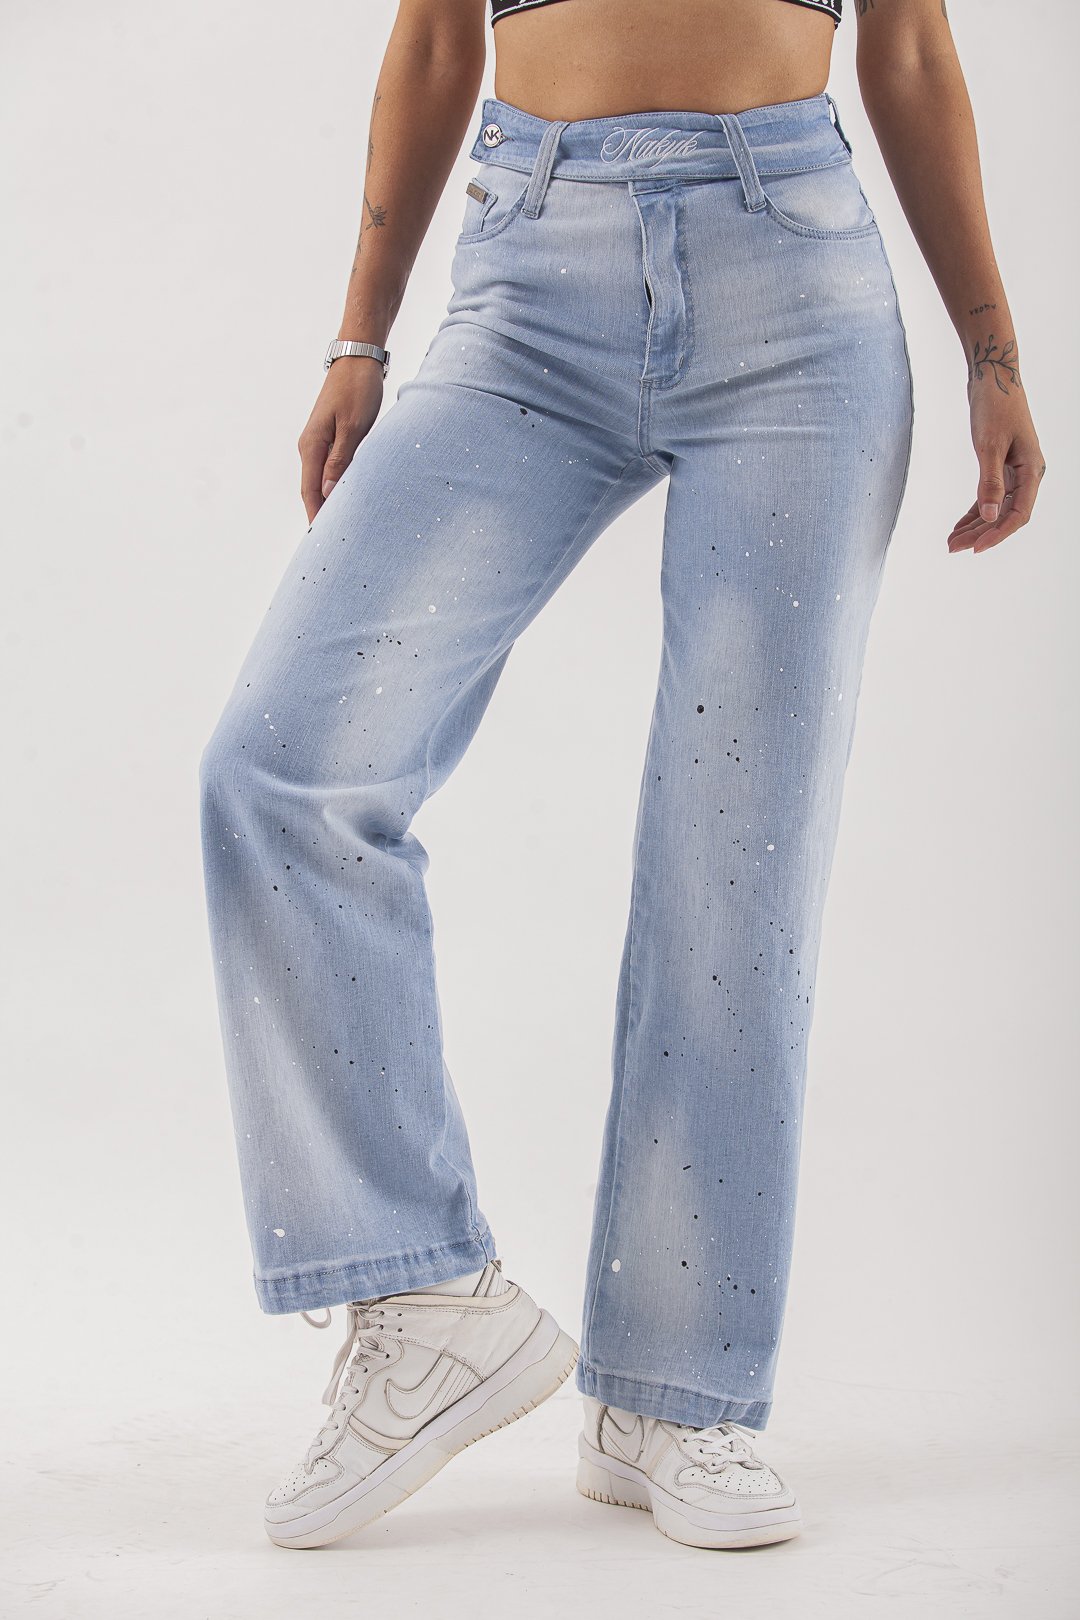 13 calca jeans claro splatter 01